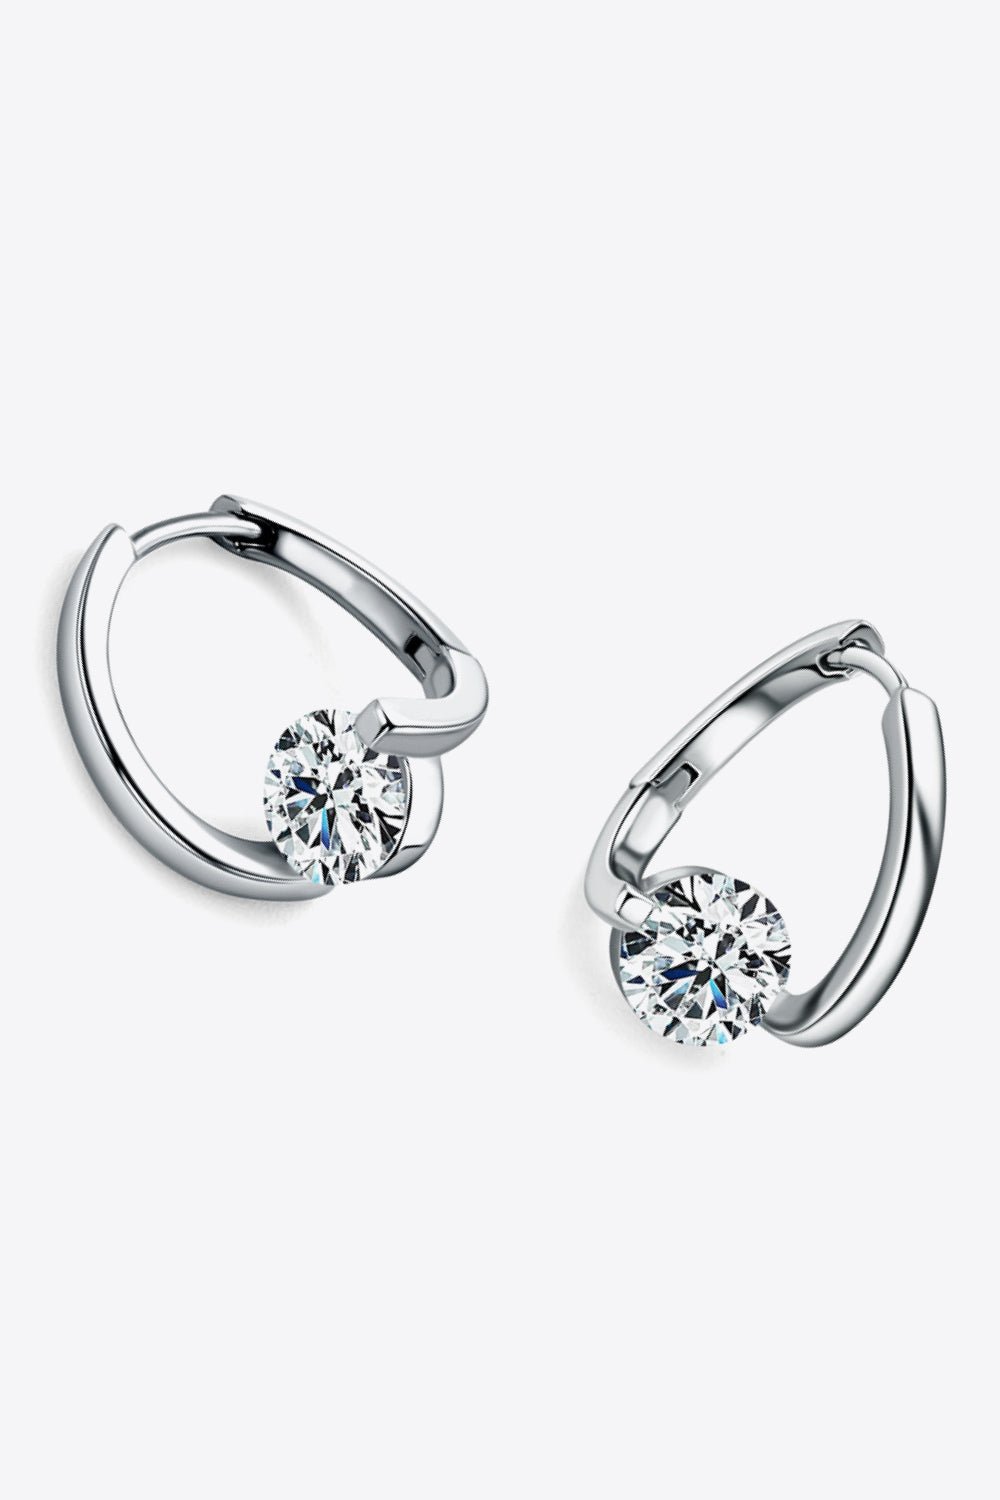 2 Carat Moissanite 925 Sterling Silver Heart Earrings - Uylee's Boutique